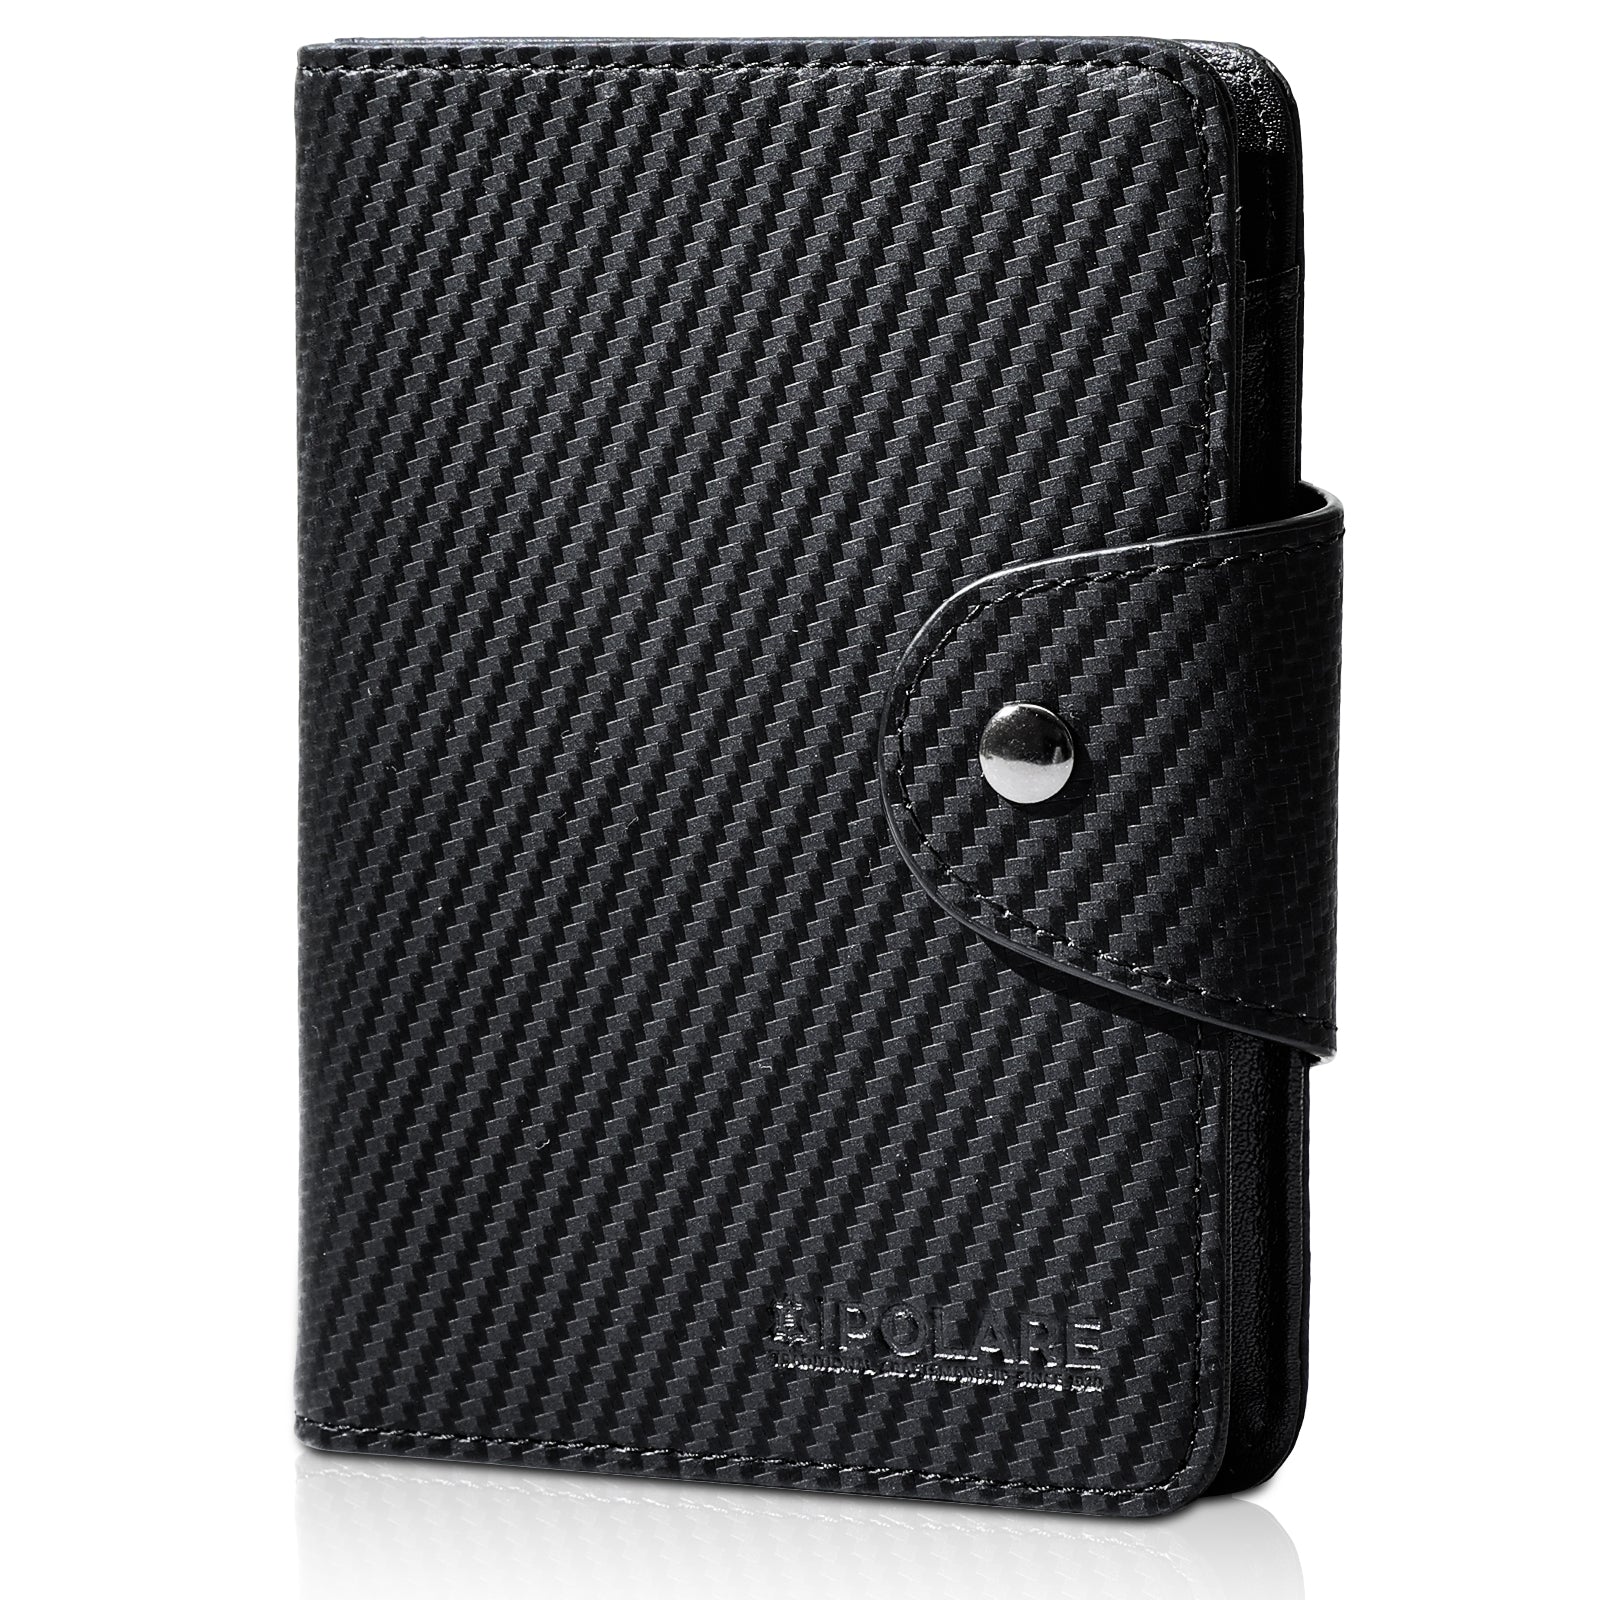 Polare Full Grain Leather Slim and Soft RFID Blocking Passport Wallet (Carbon Black)